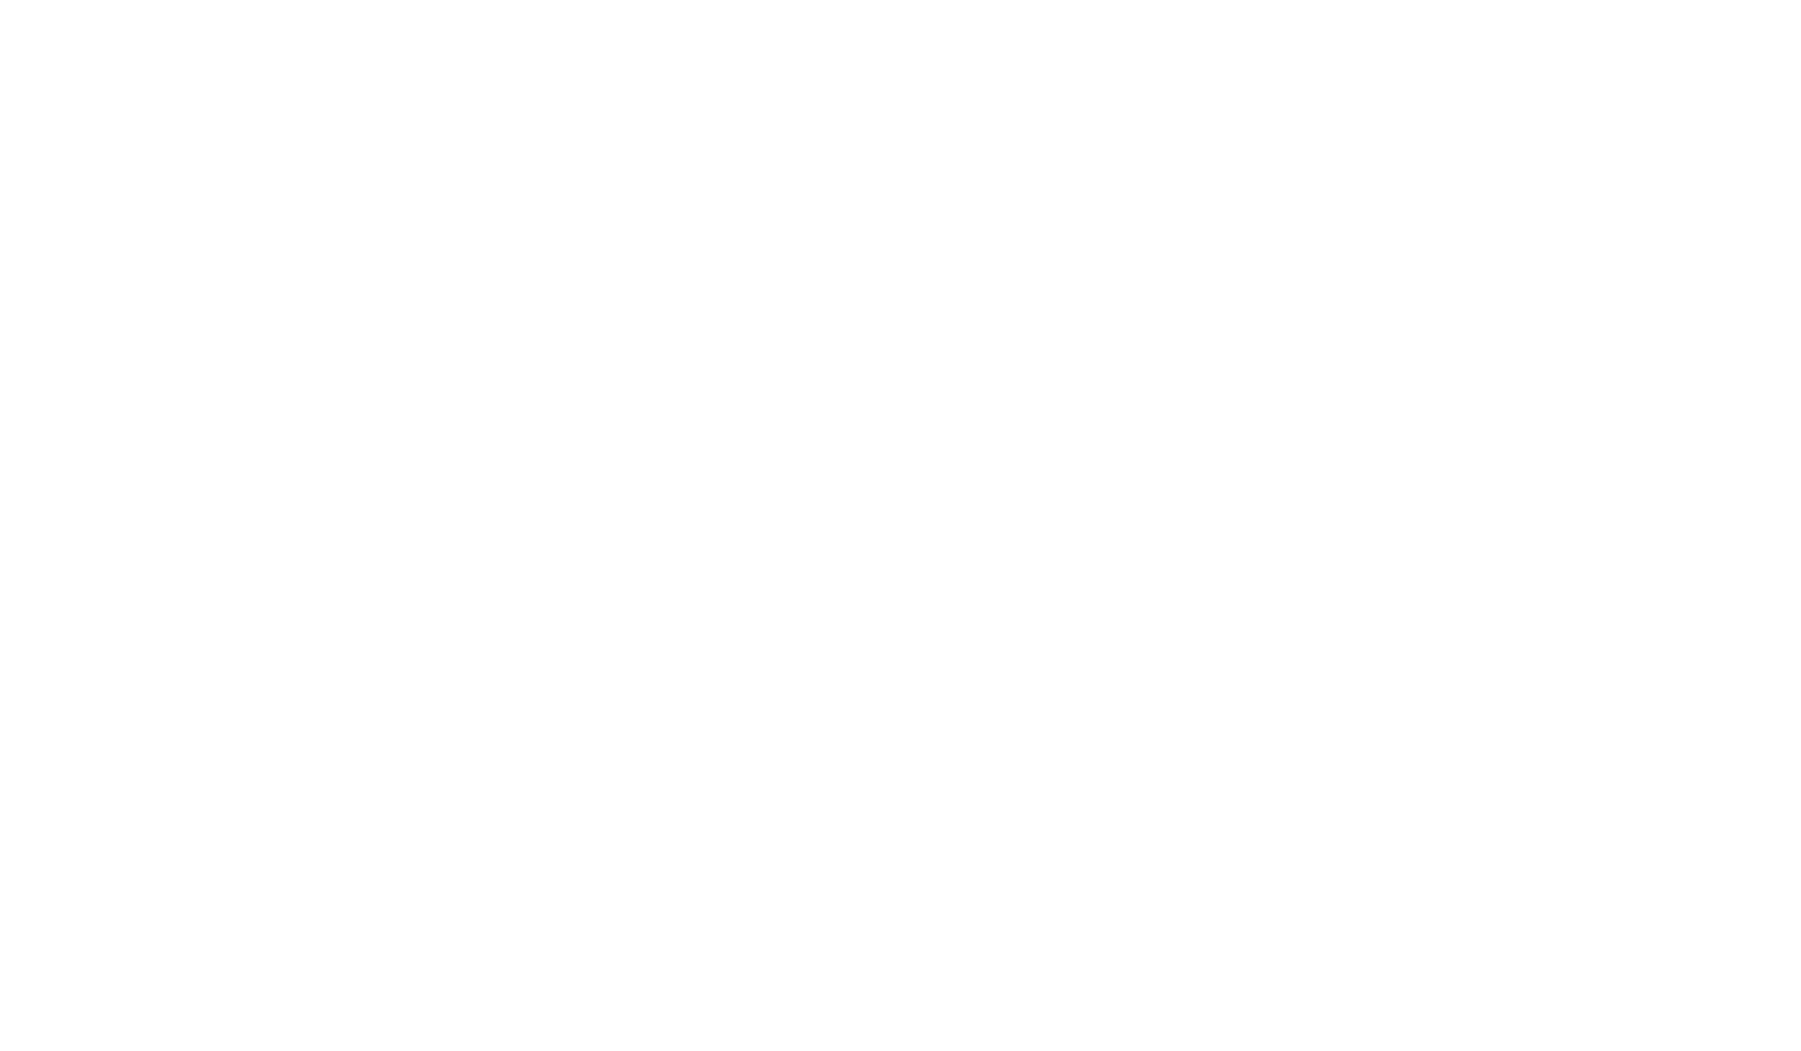 Simons Young + Associates